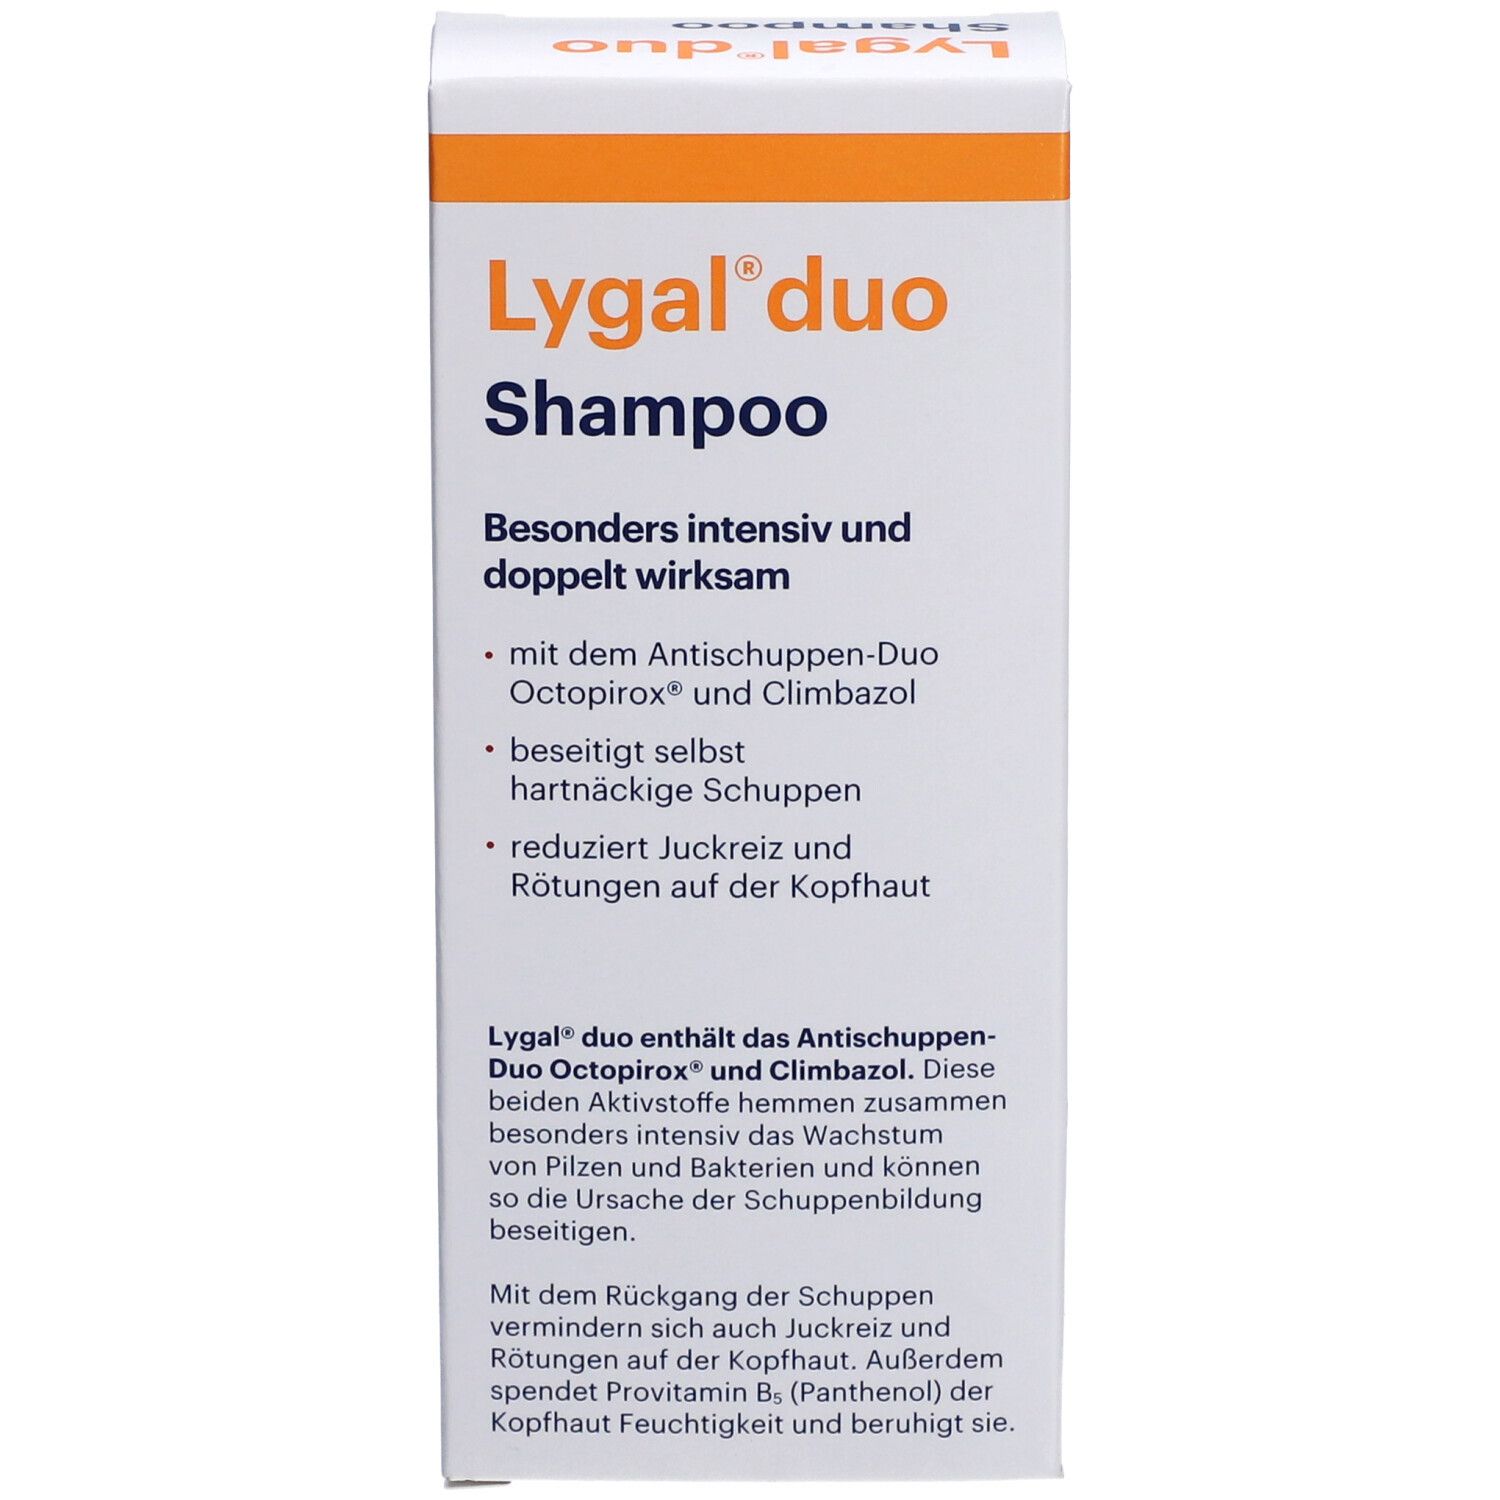 Lygal® duo SHAMPOOING